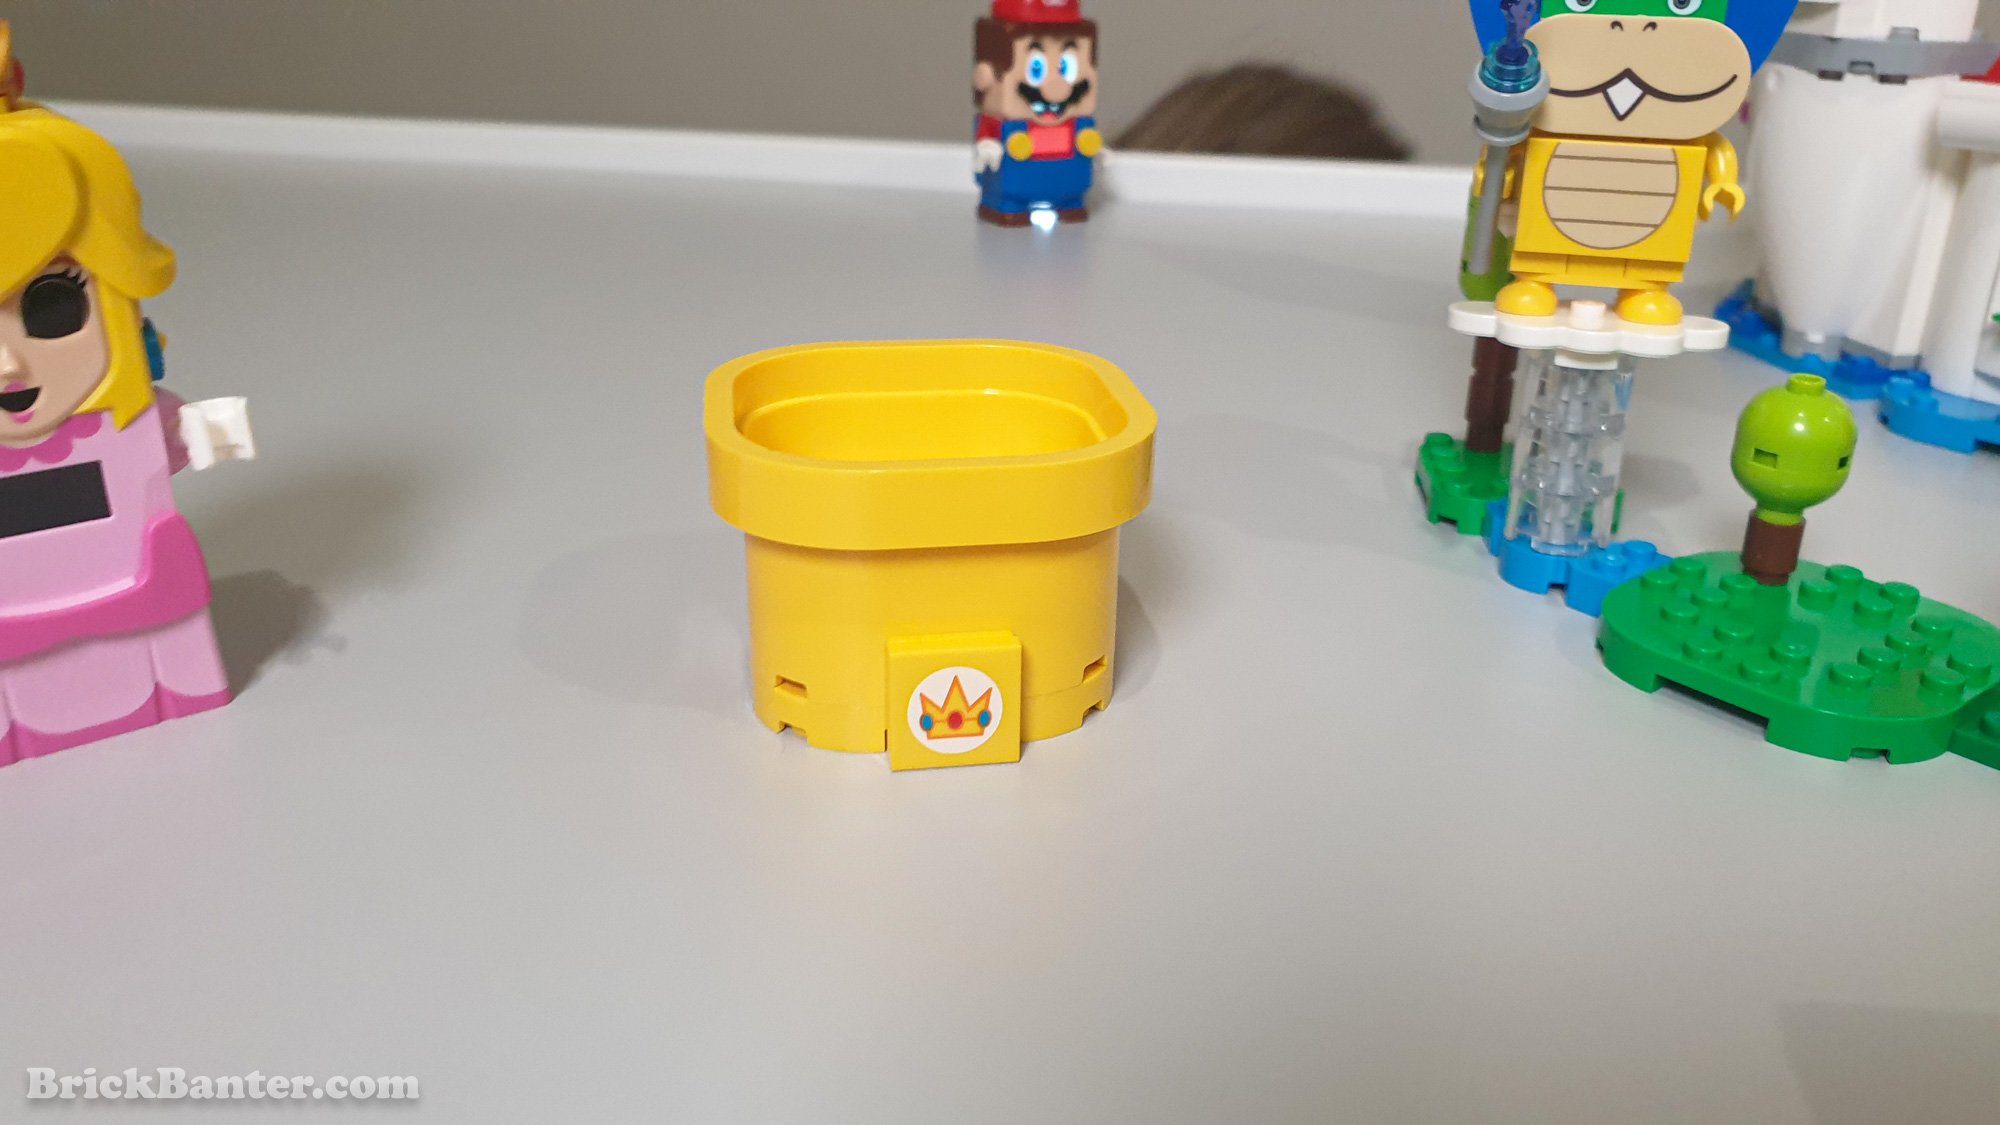 LEGO Super Mario Series 2022  - Brick Banter New Release Set Review